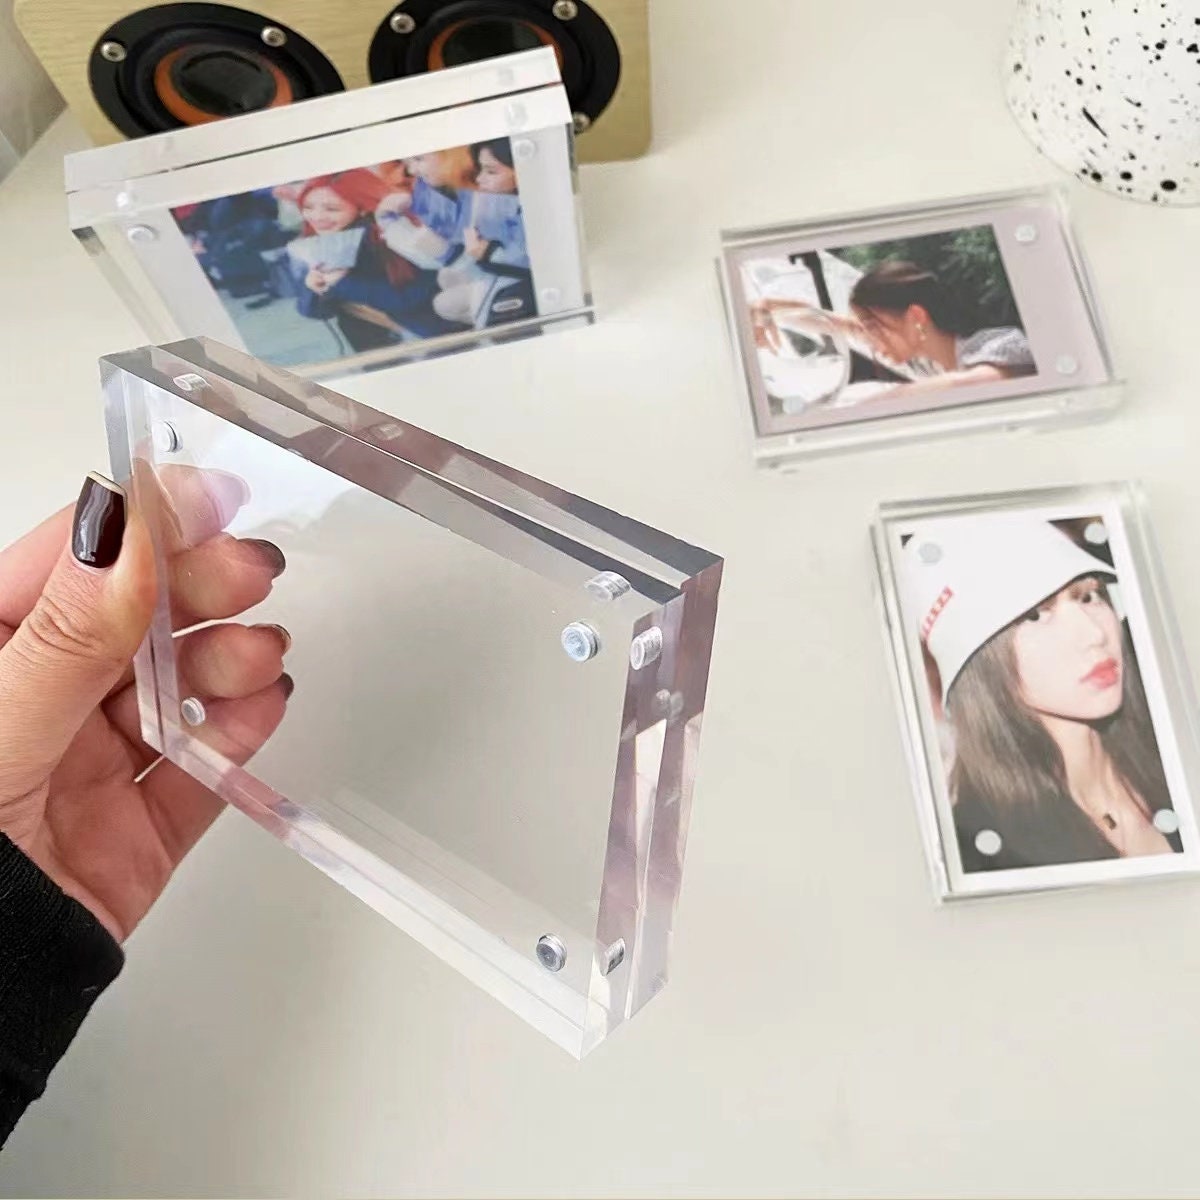 Polaroid Mini Photo Frame Picture Storage Case Kpop Cards Star